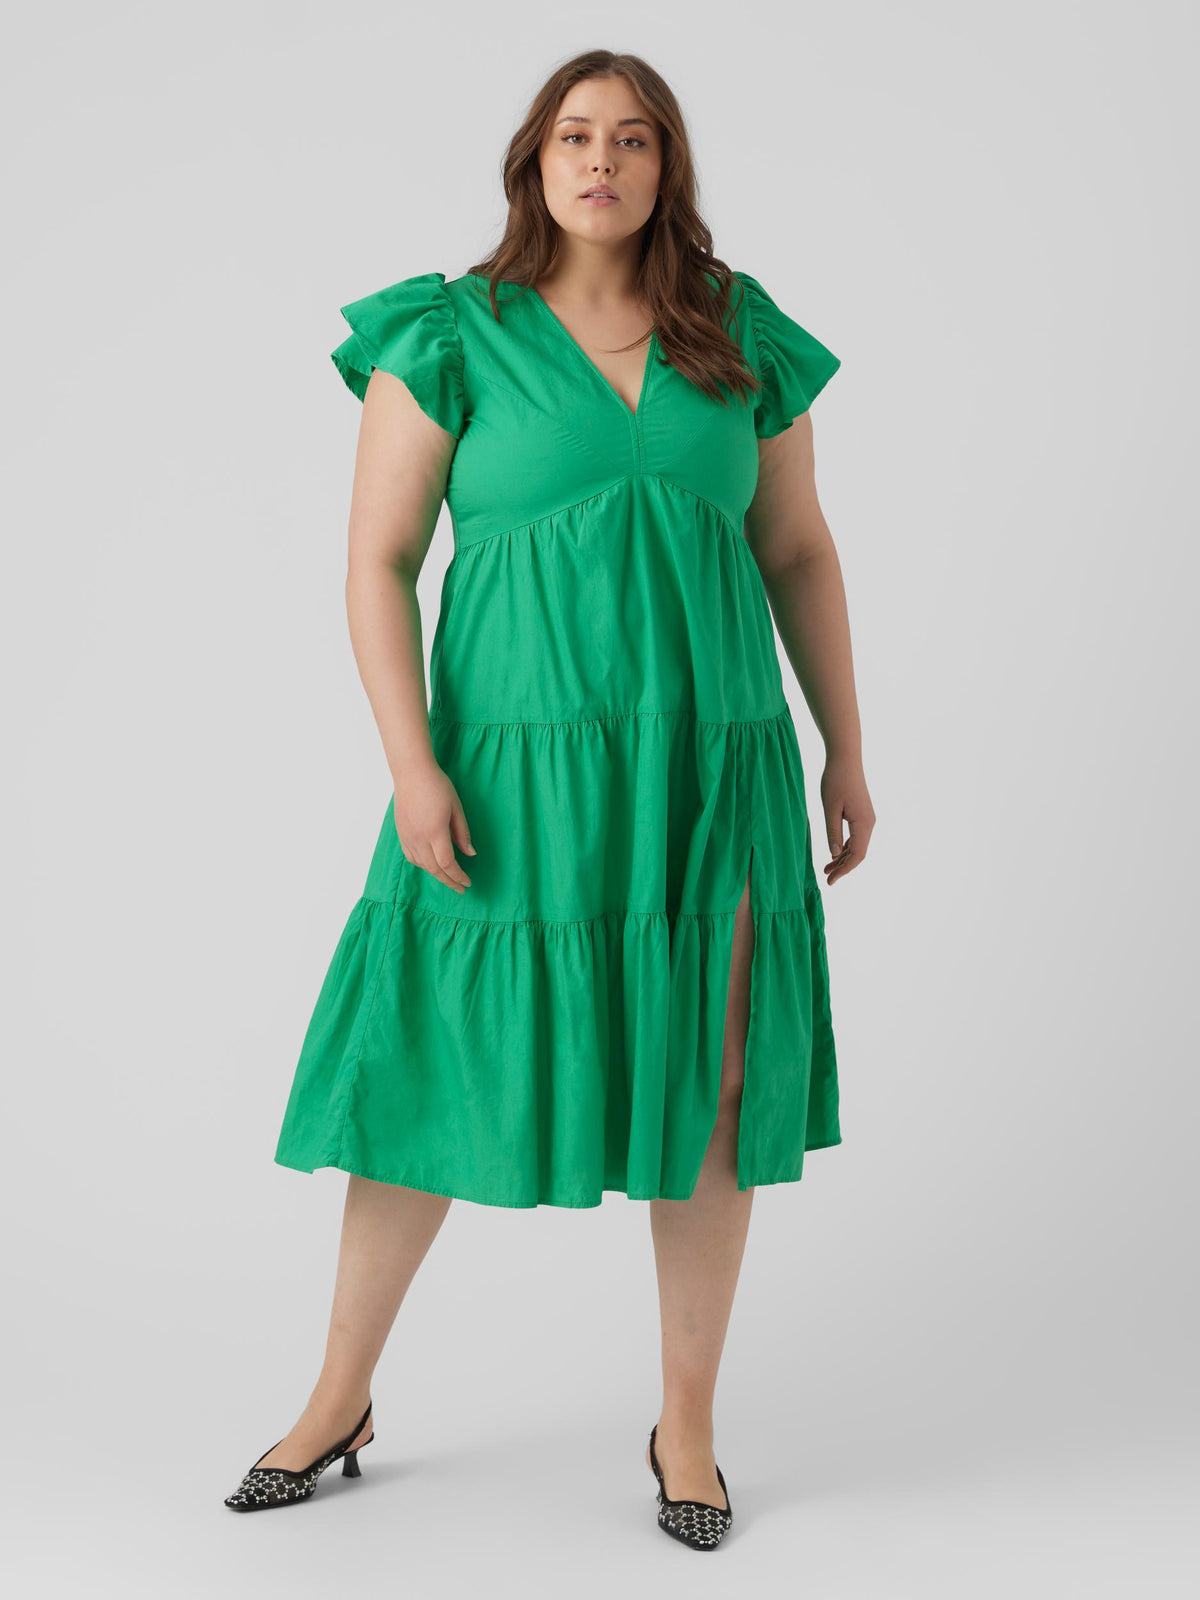 Vero Moda Tiered Dress in Green - Wardrobe Plus